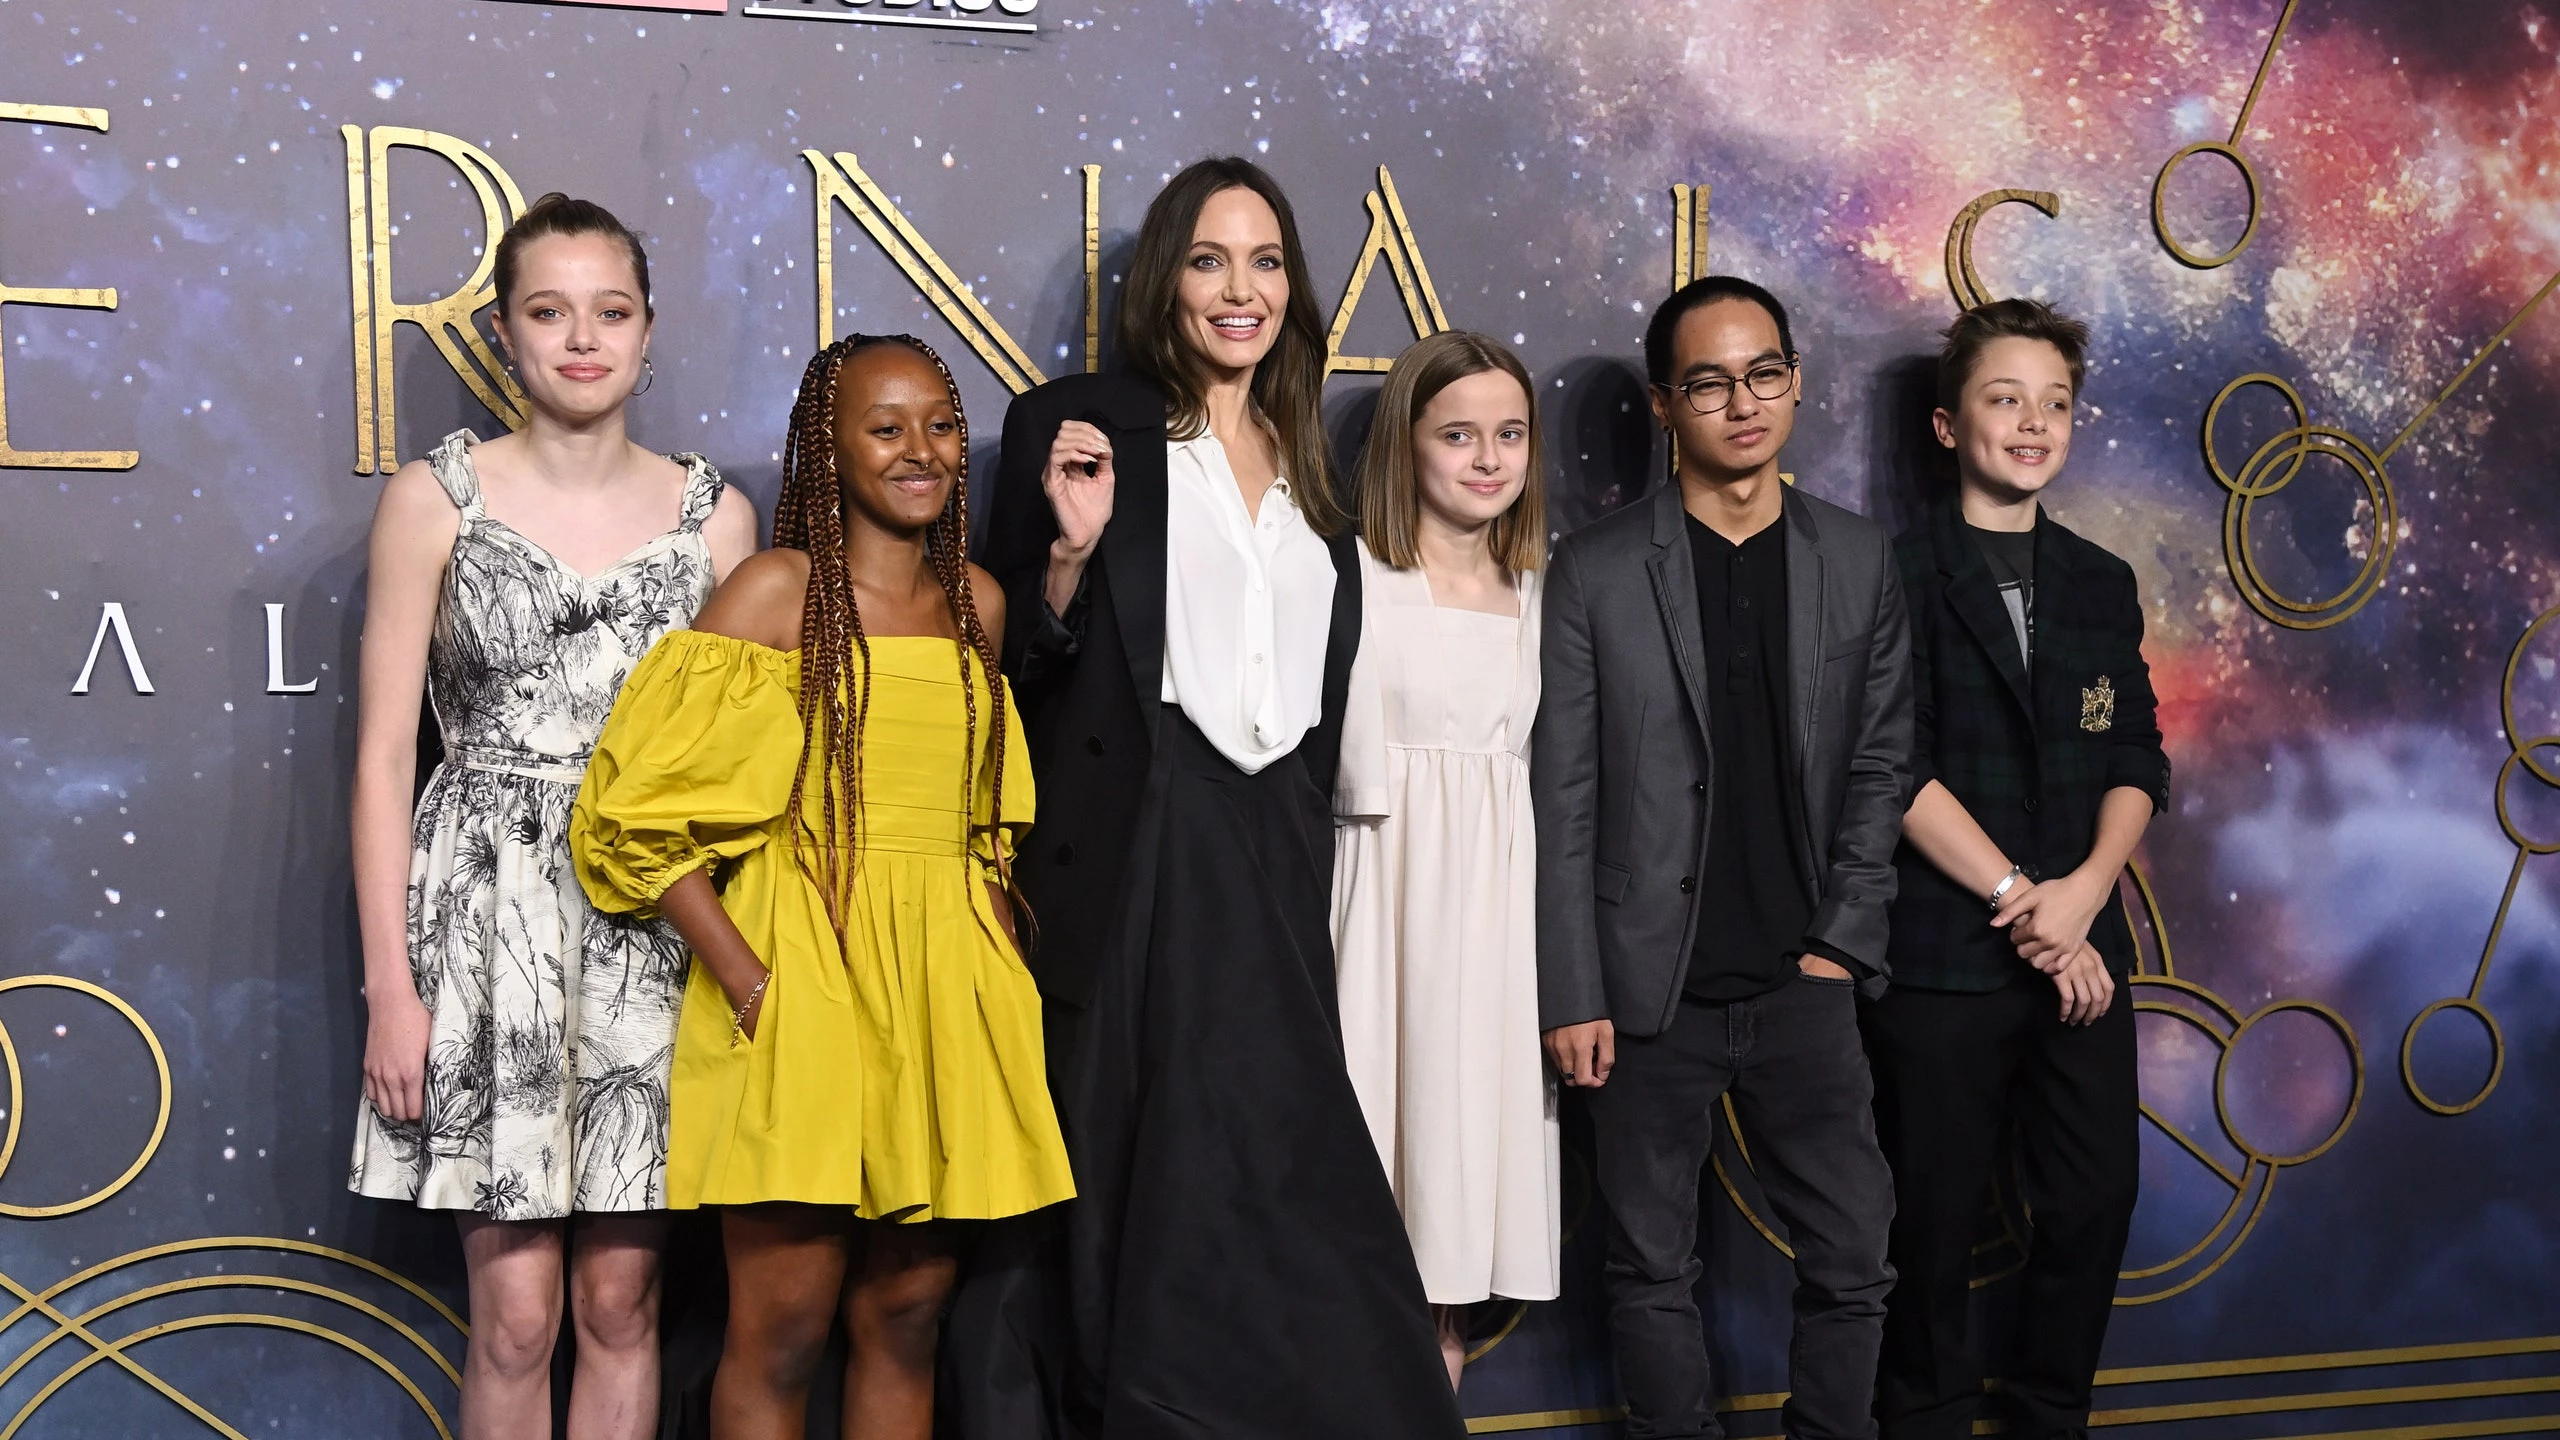 . Shiloh Jolie-Pitt, Zahara Jolie-Pitt, Vivienne Jolie-Pitt, Maddox Jolie-Pitt, and Knox Jolie-Pitt, children of Angelina Jolie